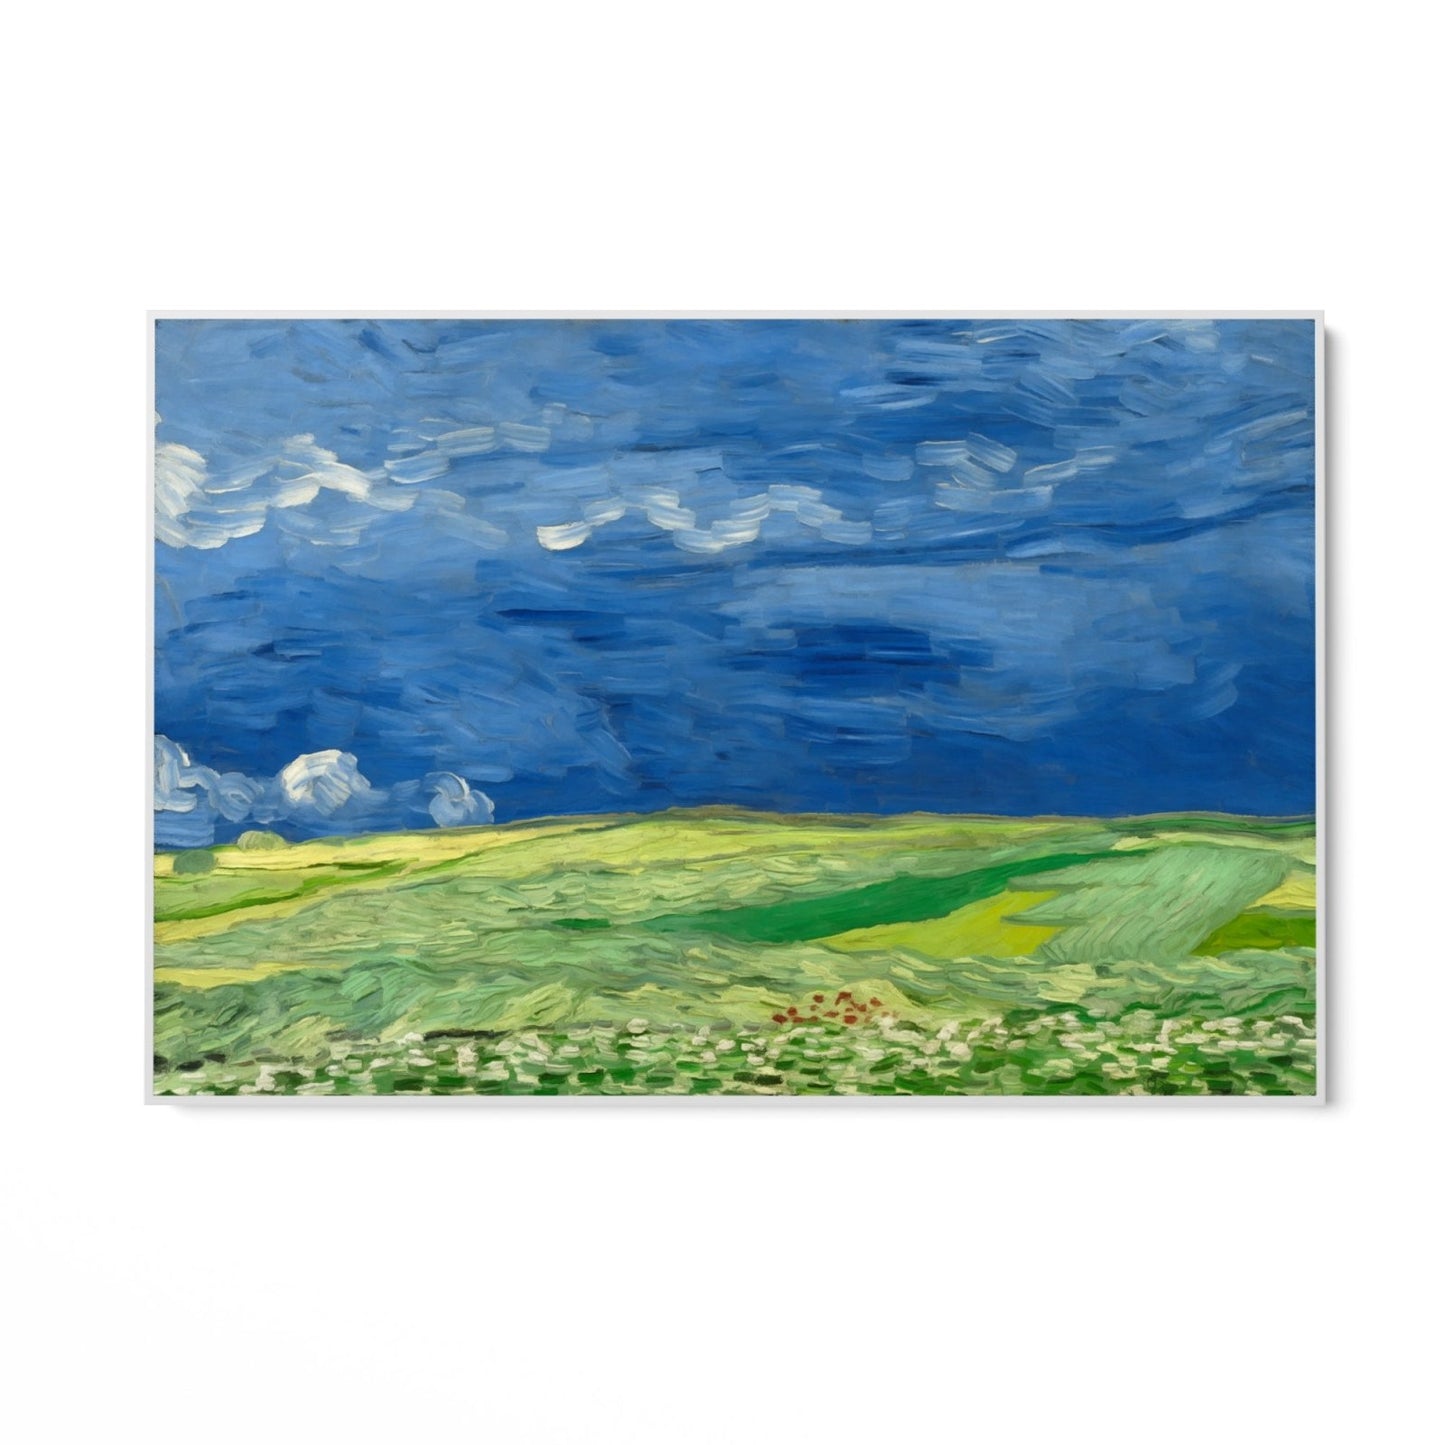 Pola pszenicy pod chmurami burzowymi, Vincent Van Gogh